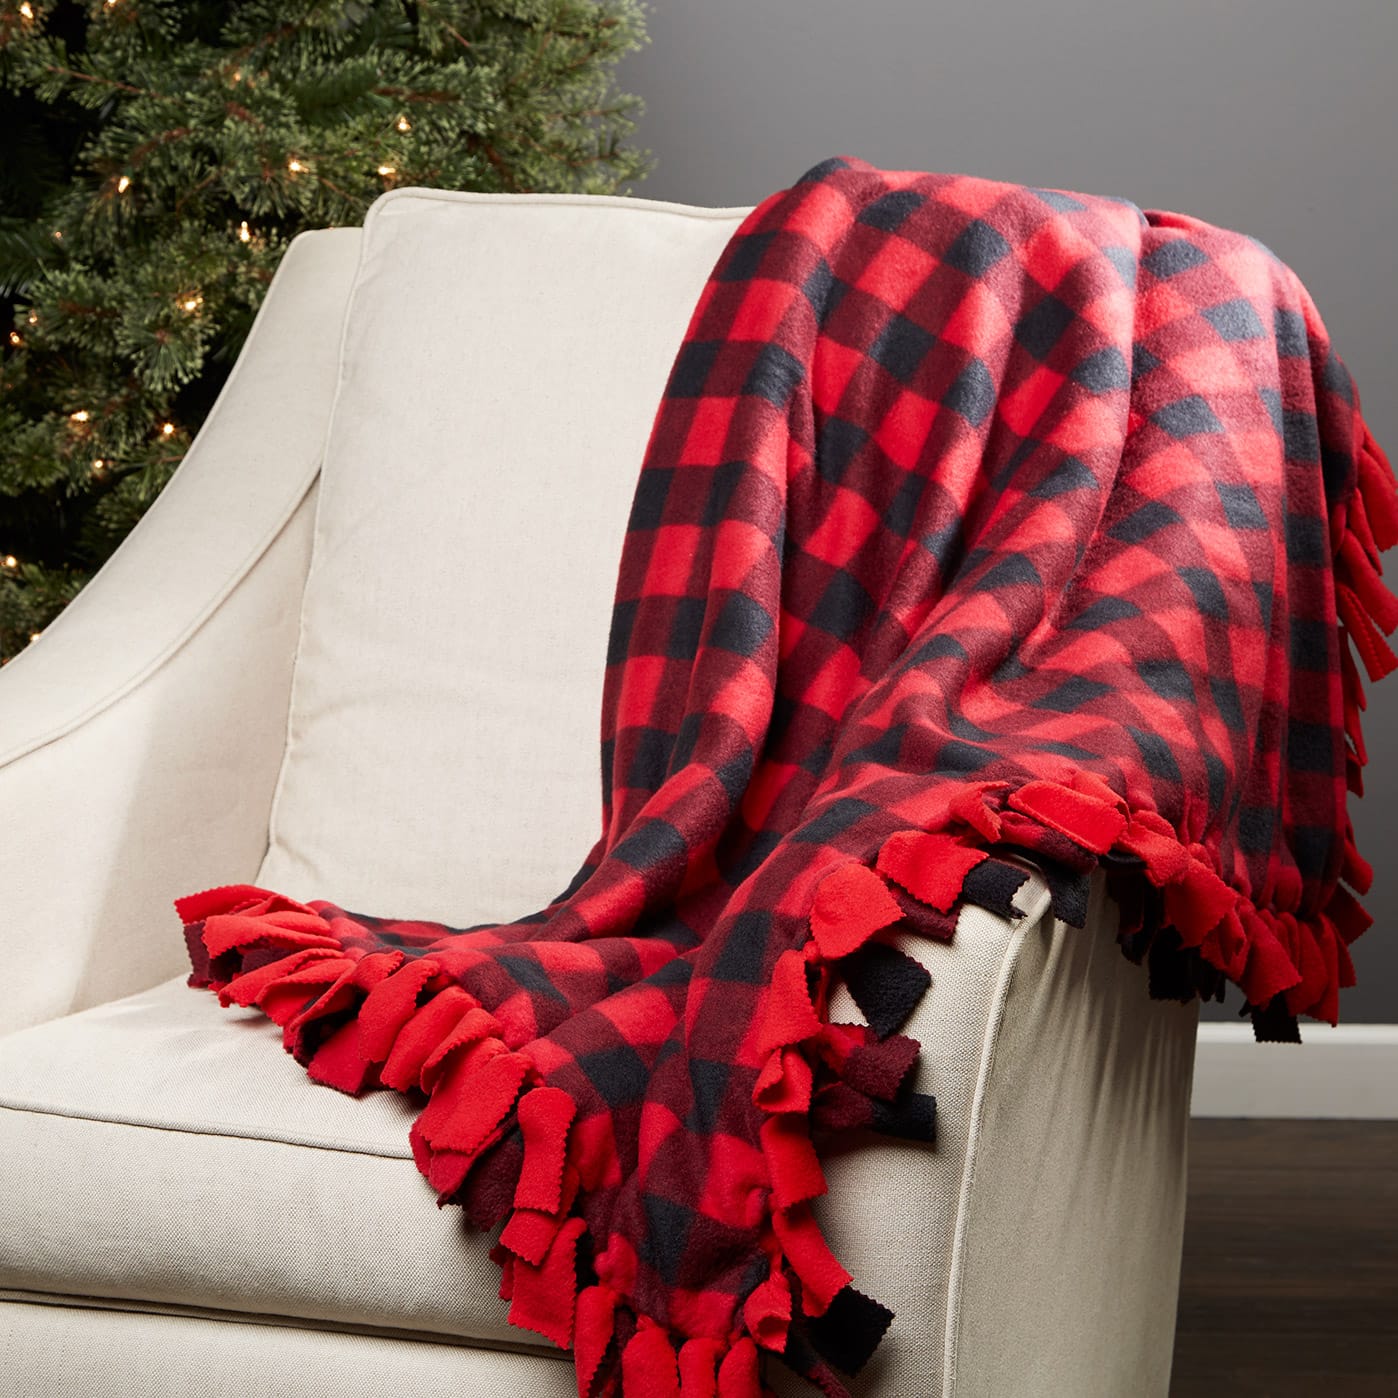 How to Make a No-Sew Fleece Blanket